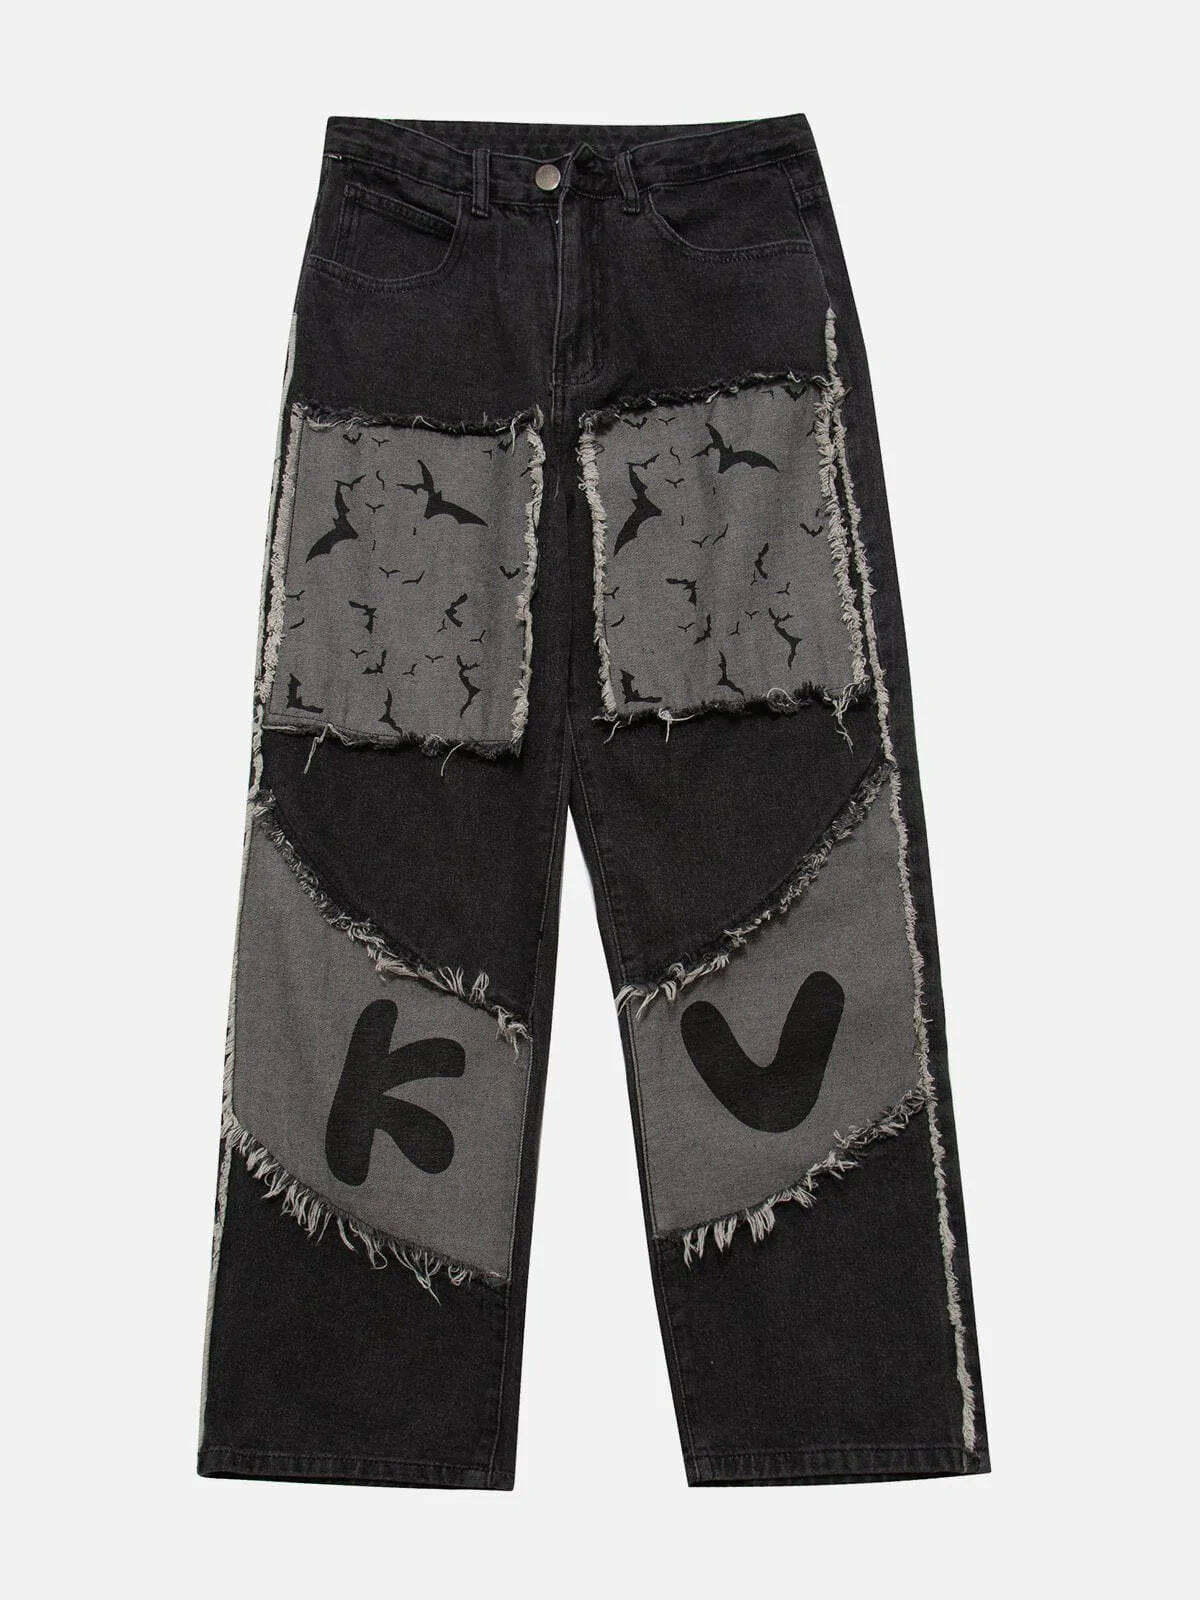 custom patchwork jeans edgy & retro streetwear 4093